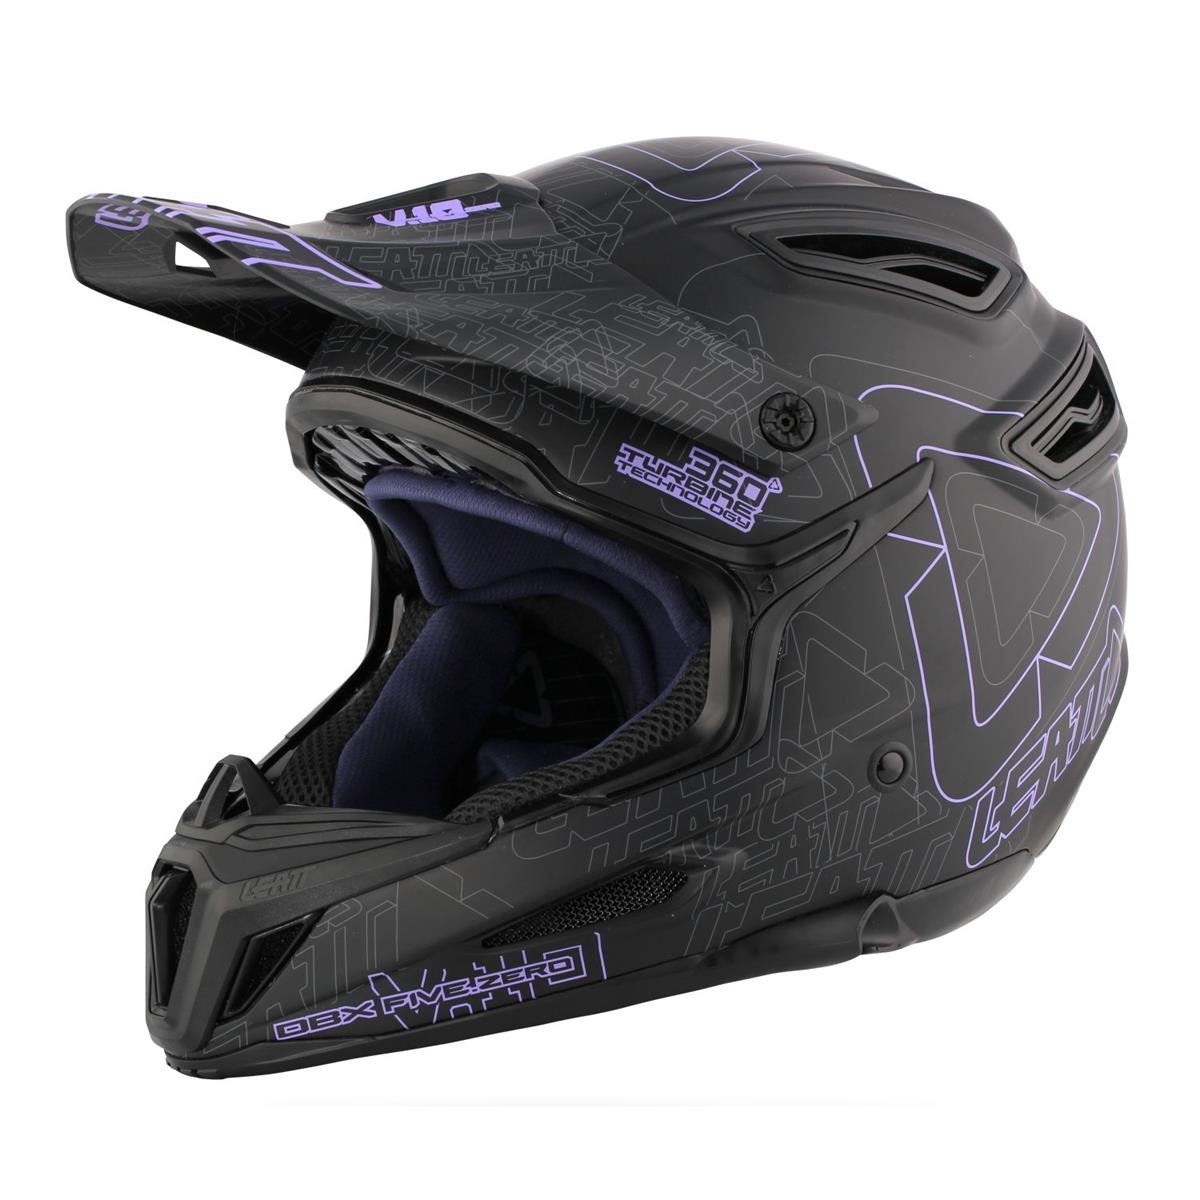 Leatt Downhill-MTB Helmet DBX 5.0 Composite Black/Purple/Grey